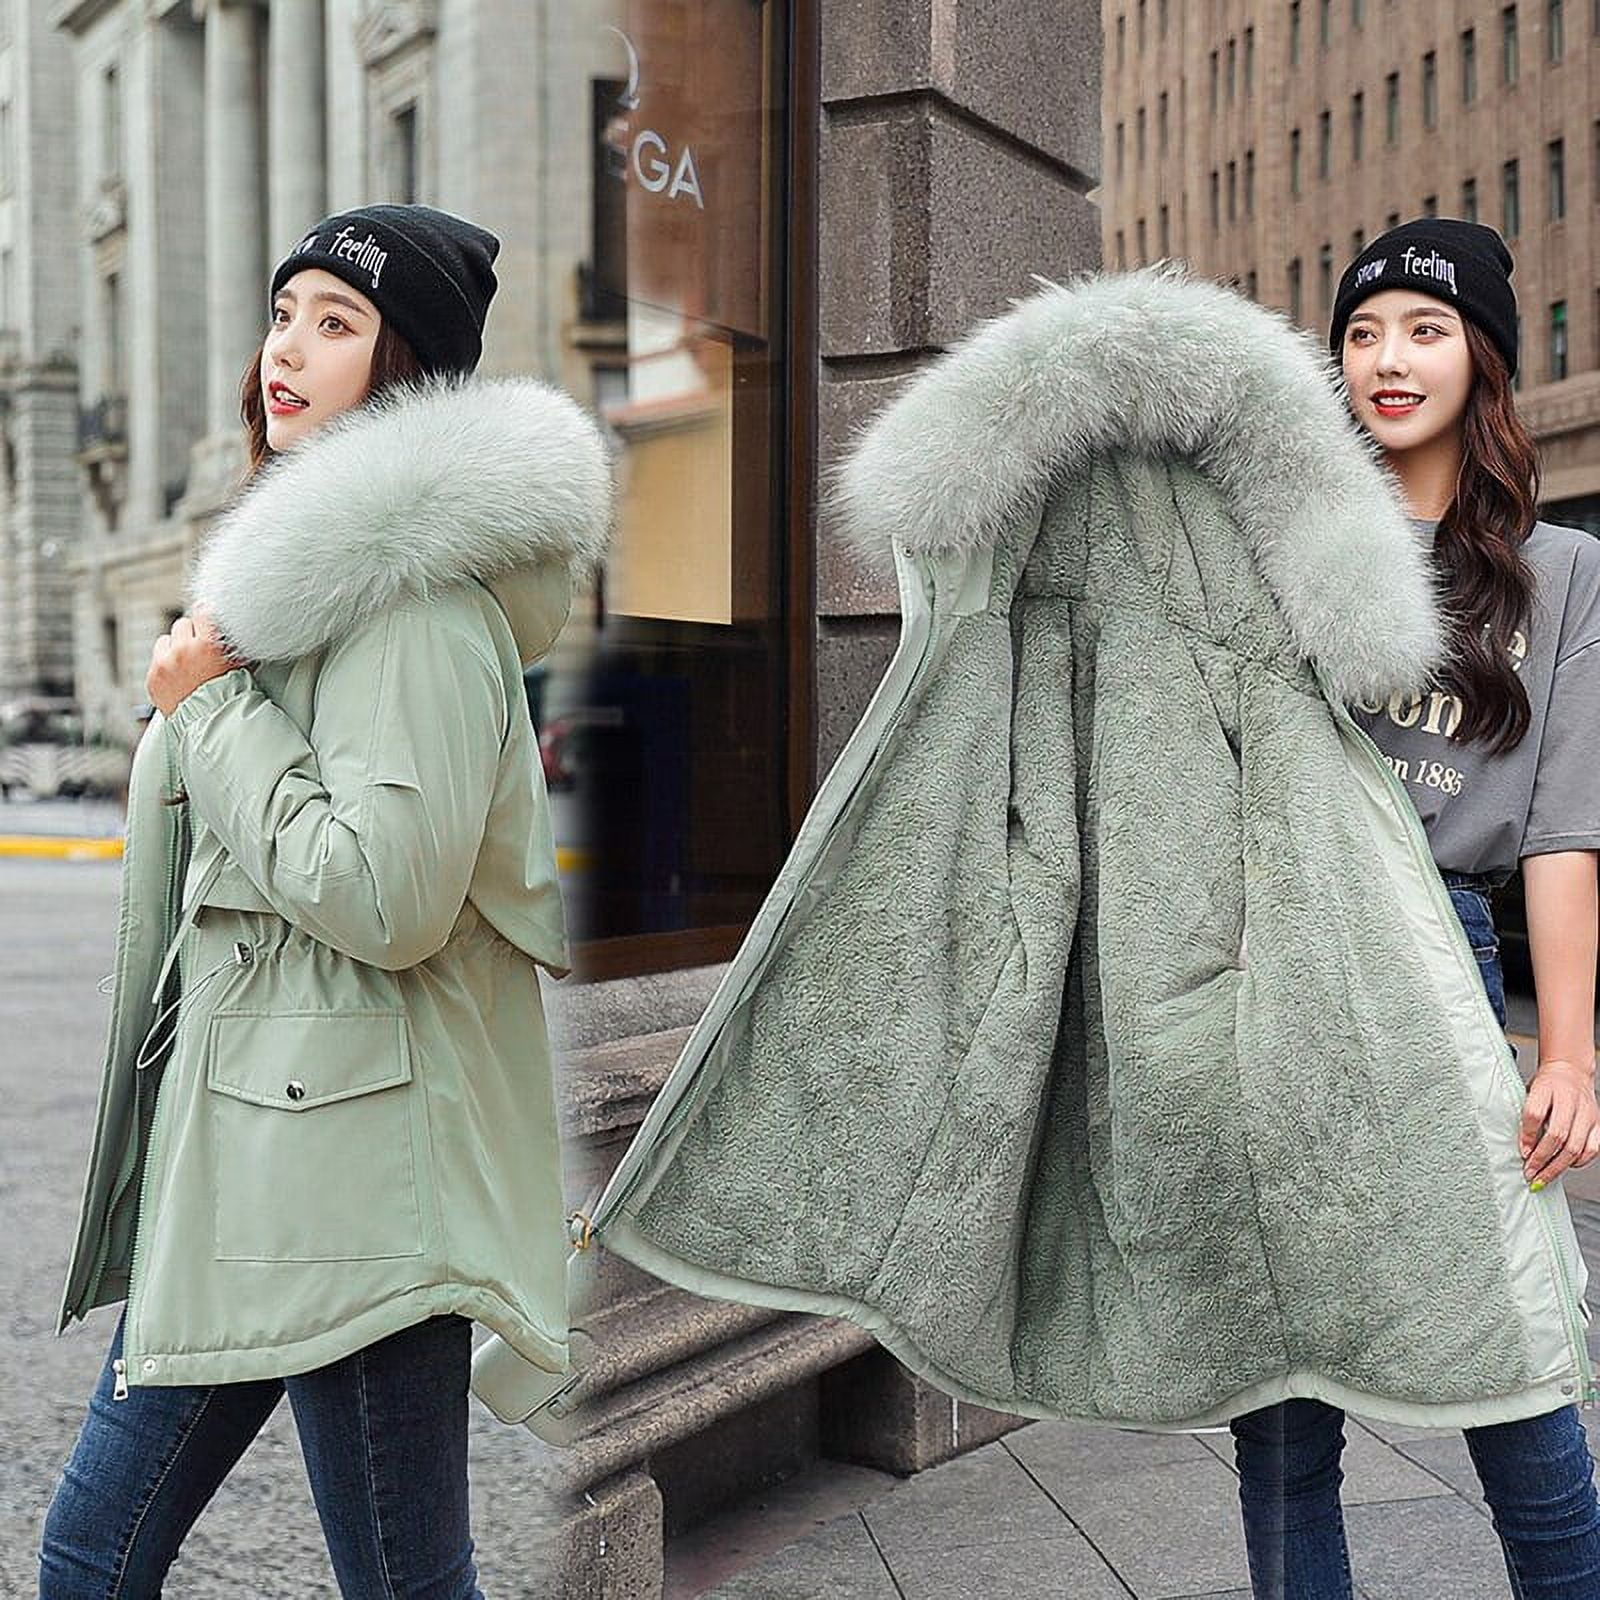 Danceemangoo Winter Jacket Women Clothing Korean Hooded Short Coat Women Casual Parkas Loose Cotton Coats and Jackets Abrigos Mujer Invierno, Adult